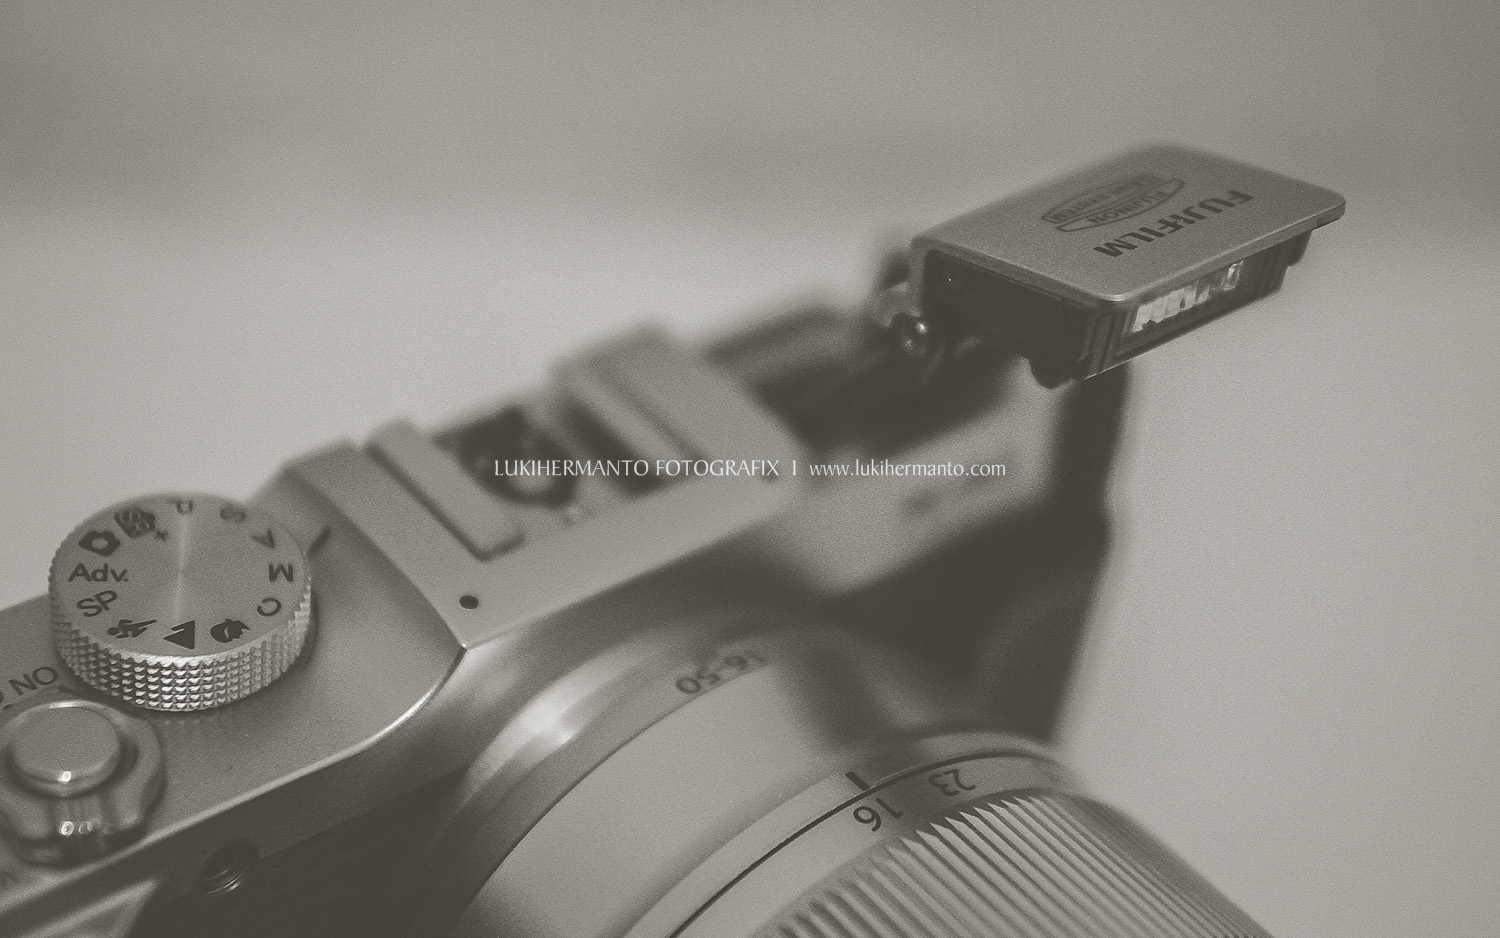 Fujifilm X-A1 | LUKIHERMANTO FOTOGRAFIX